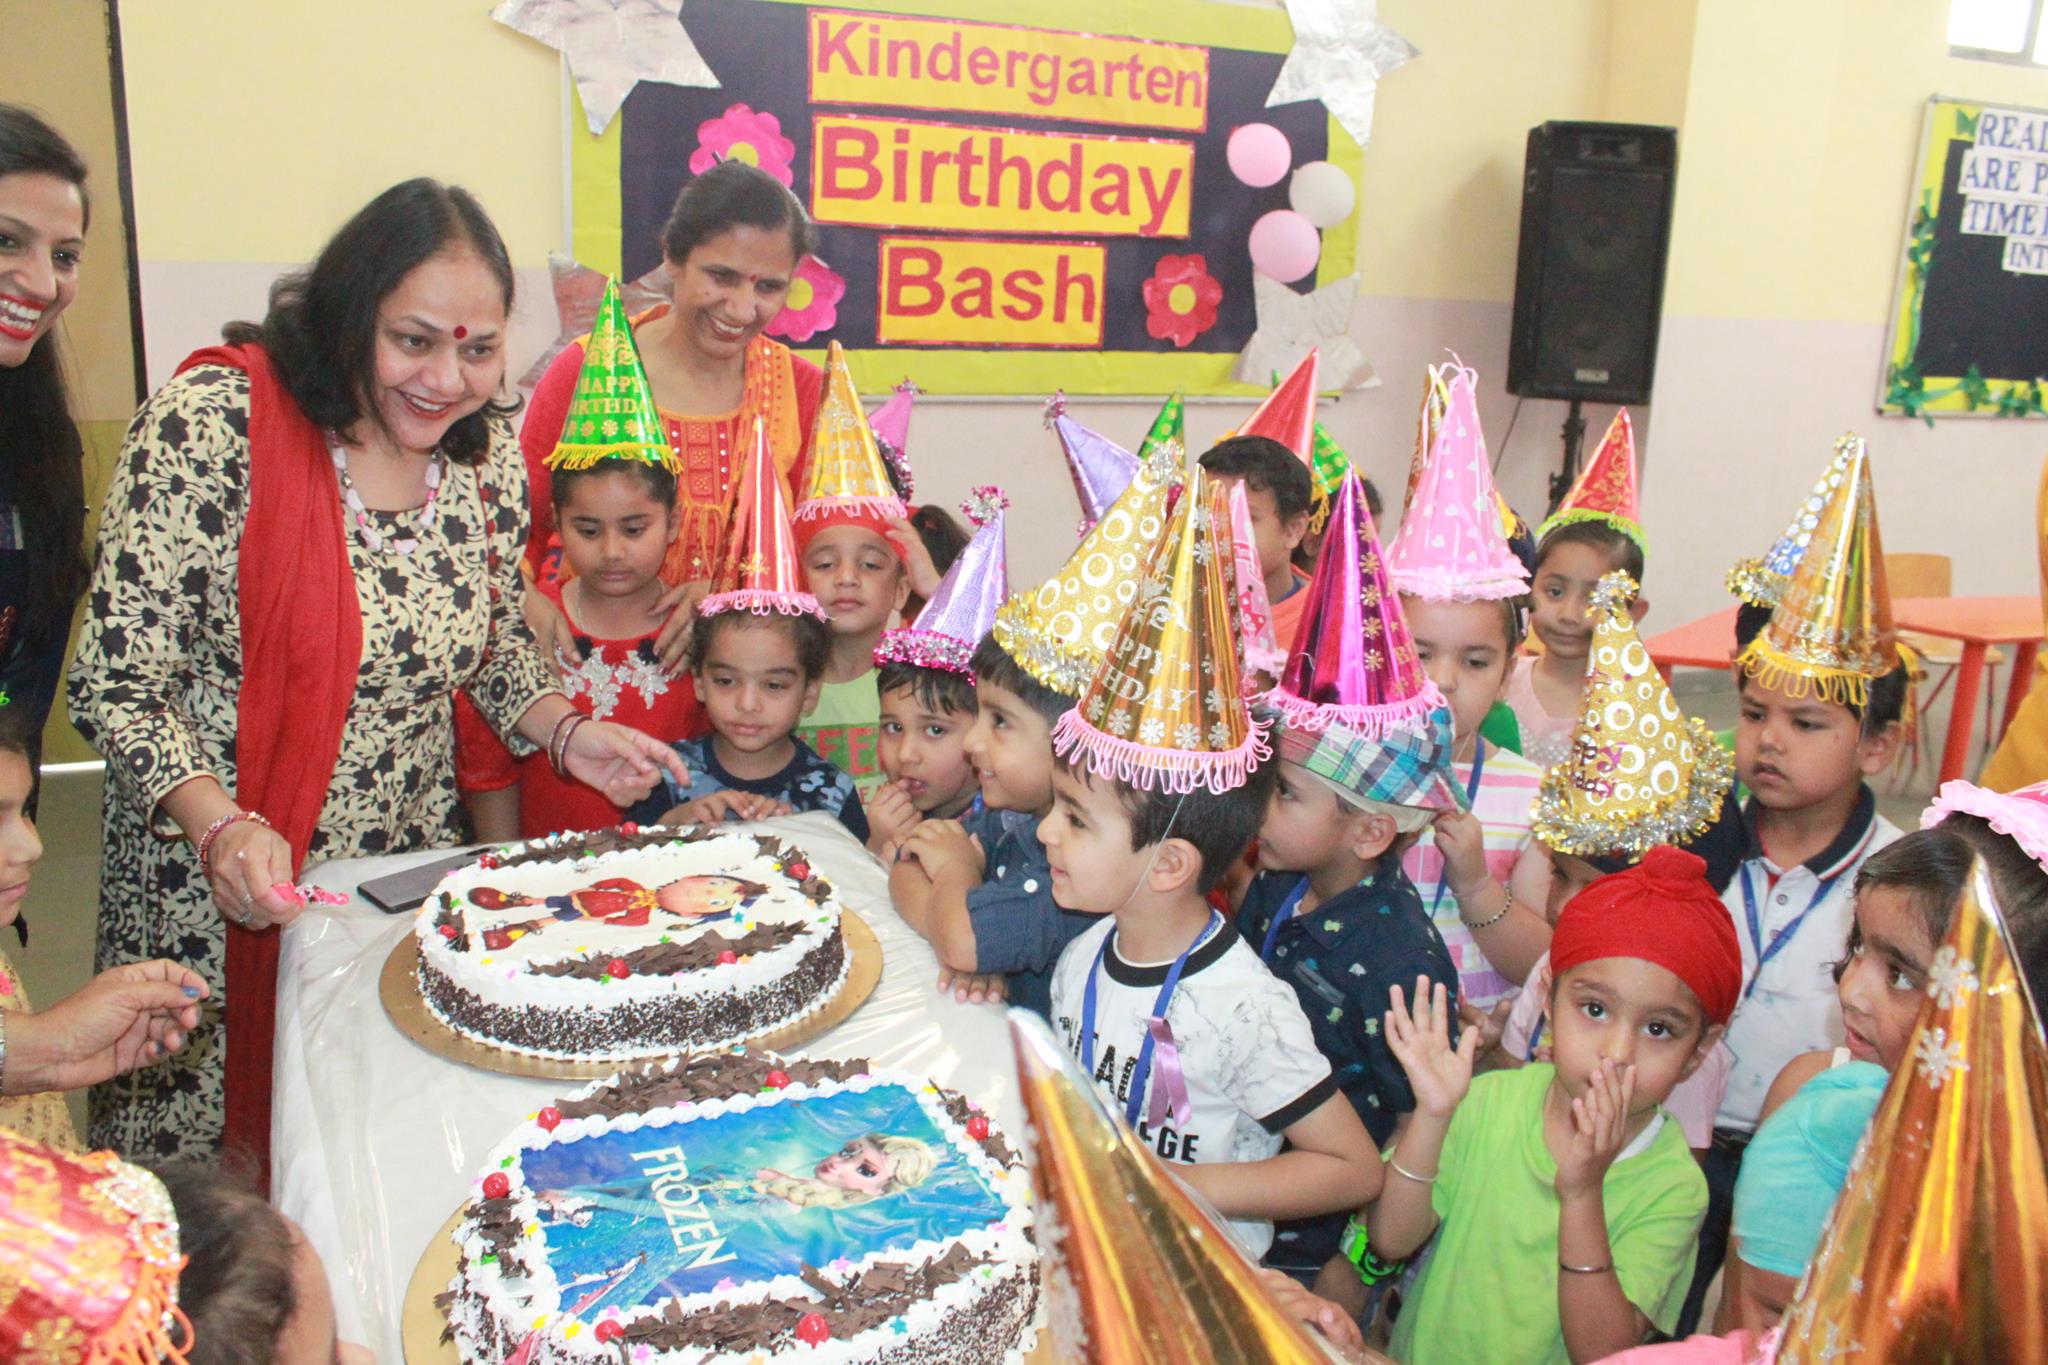 Kindergarten Birthday Bash #Fun #Games #Dance #Party Time